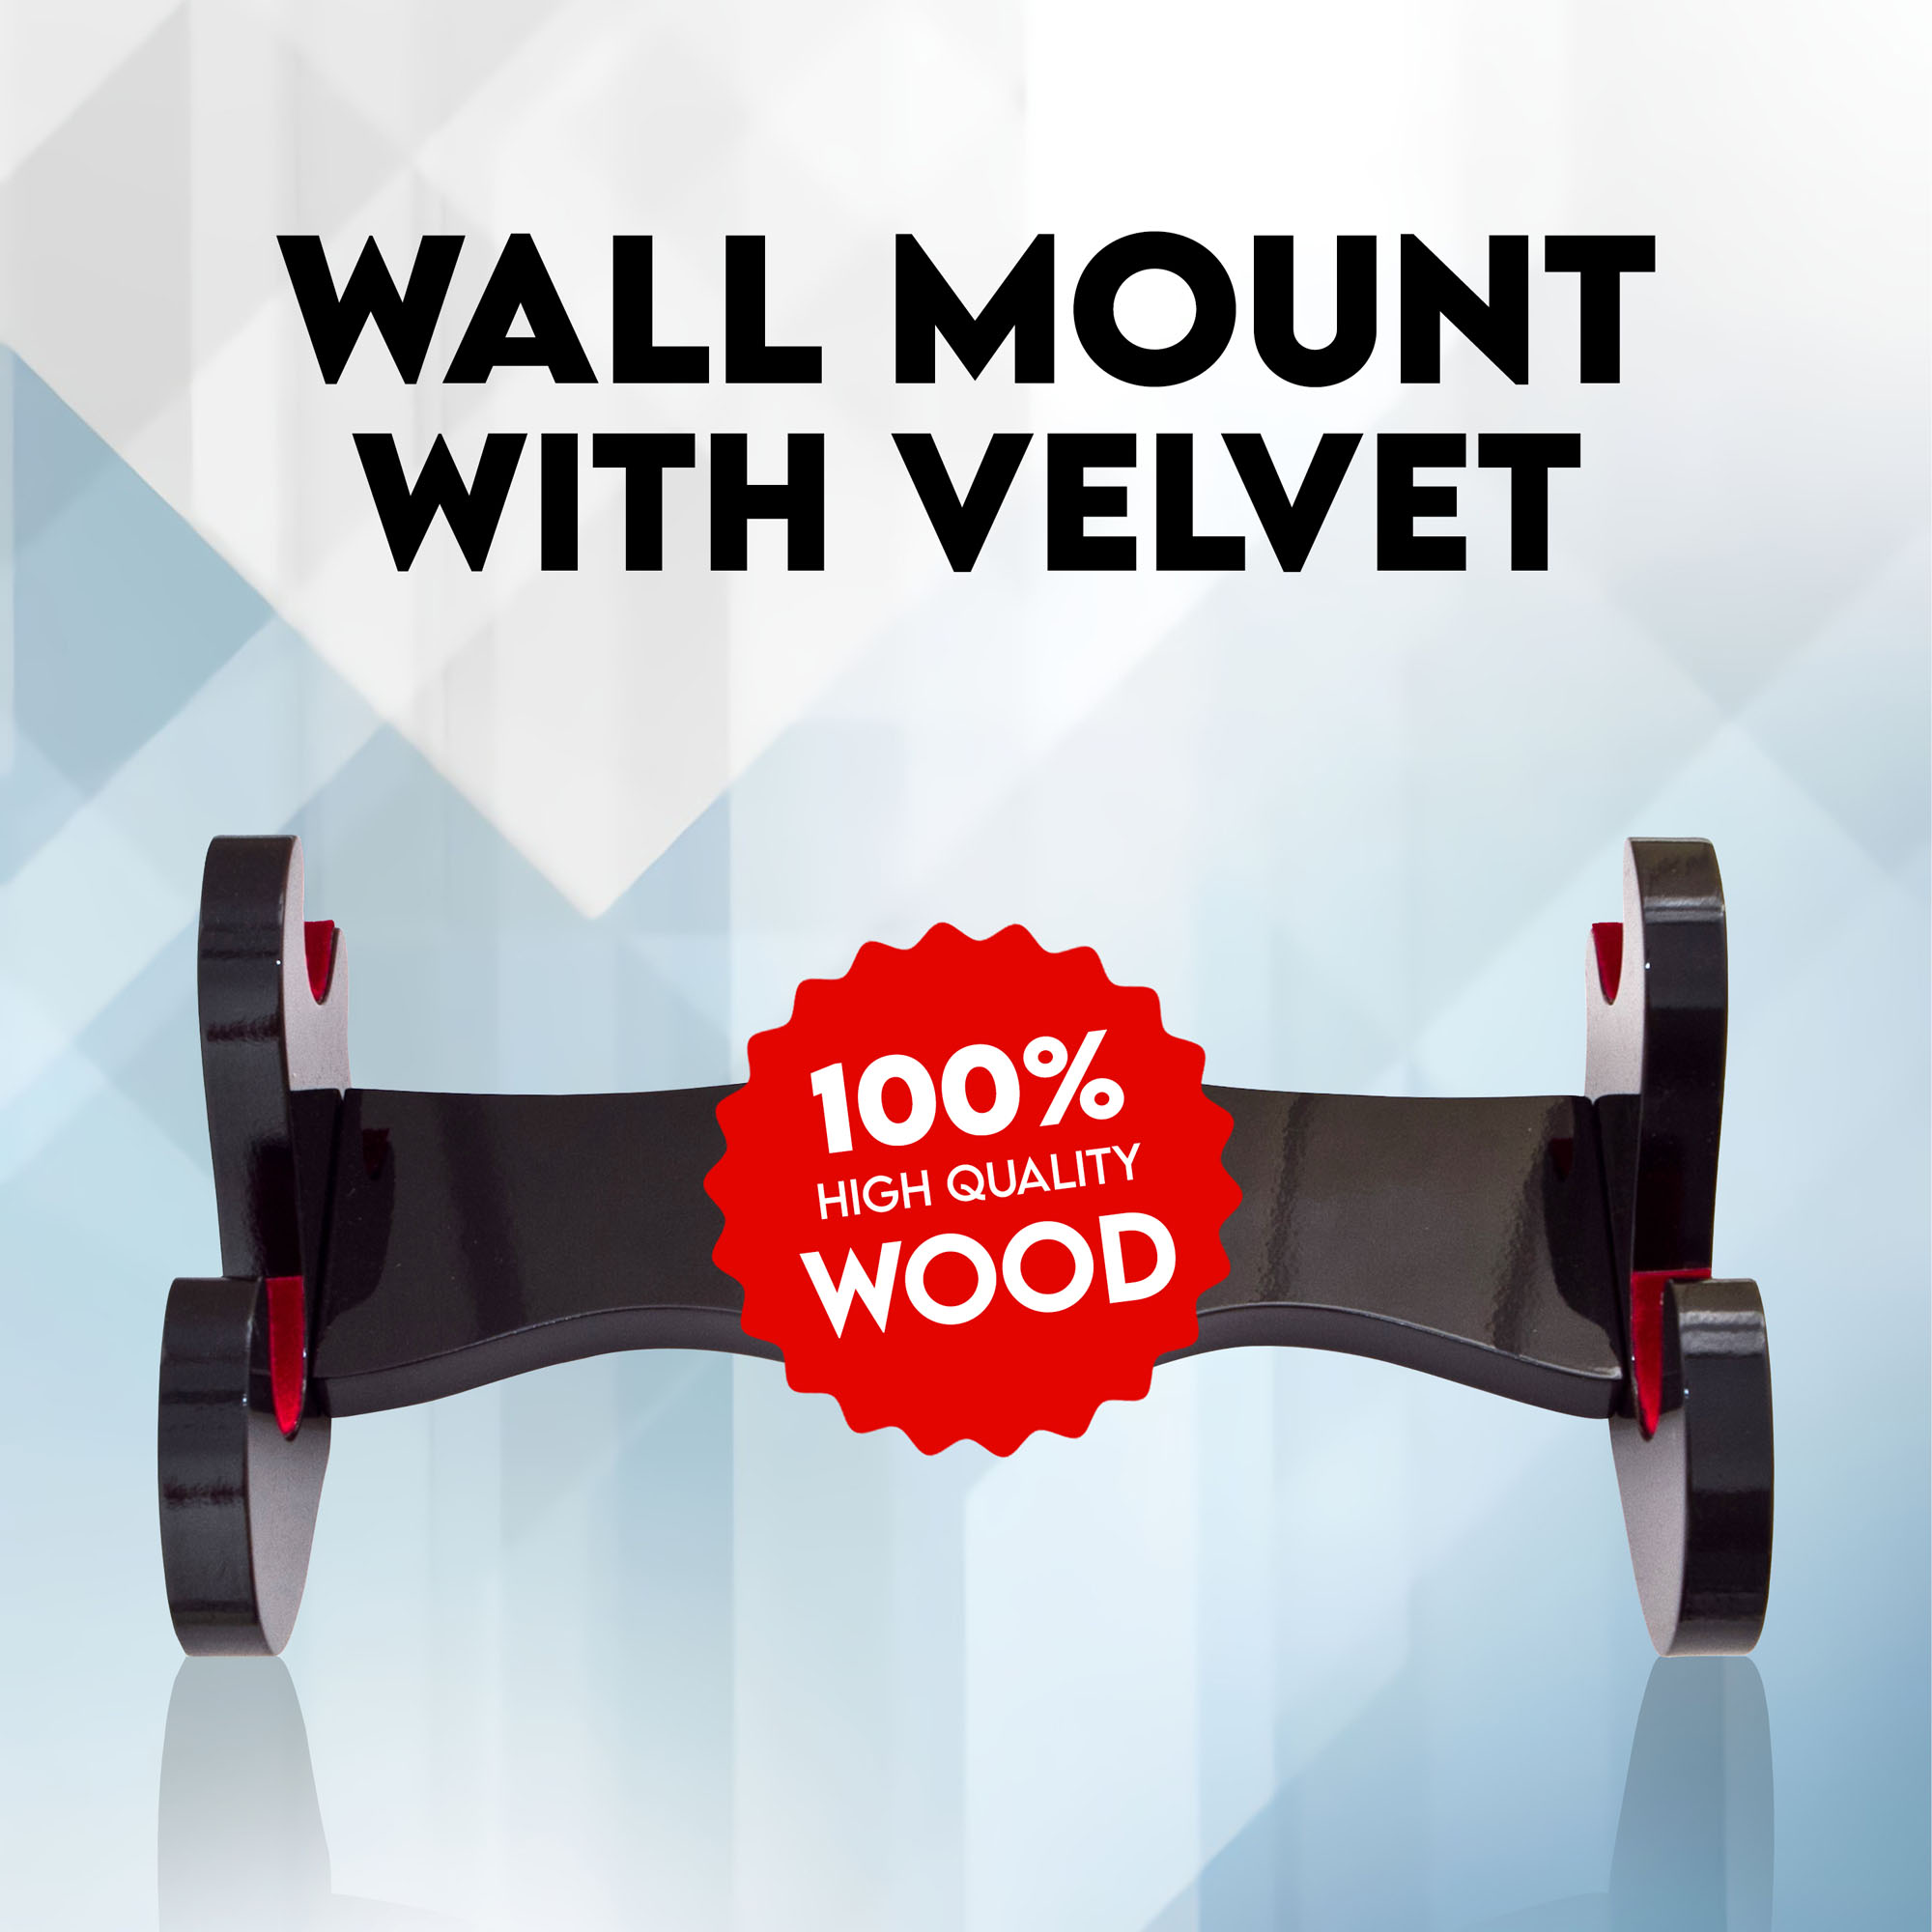 Wall Mount with velvet